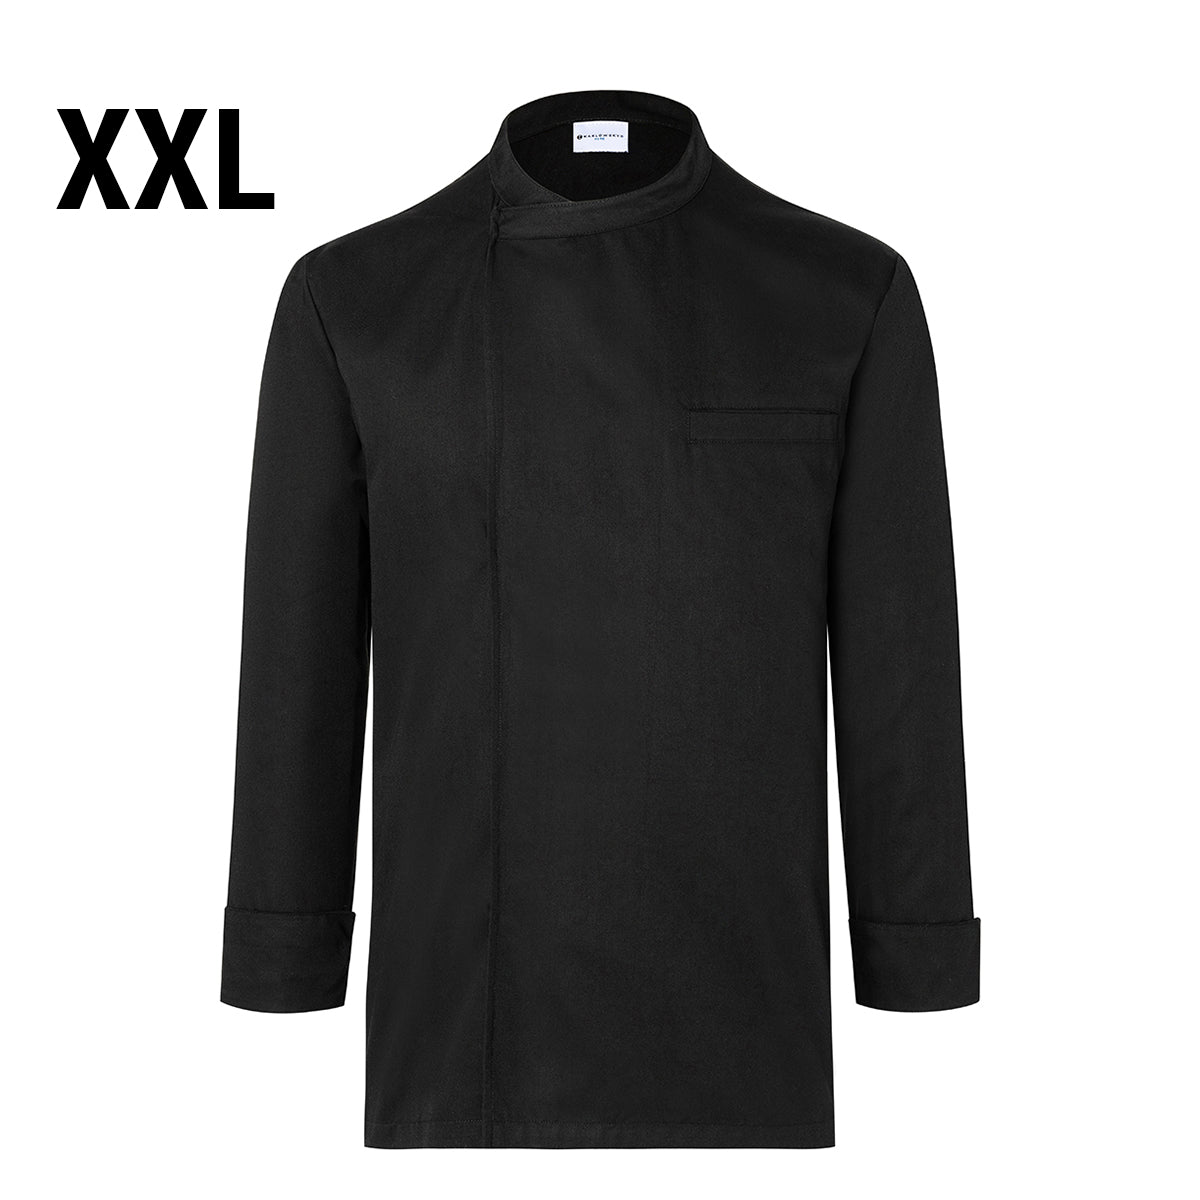 (6 stk) Karlowsky langermet skjorte - svart - str. XXL